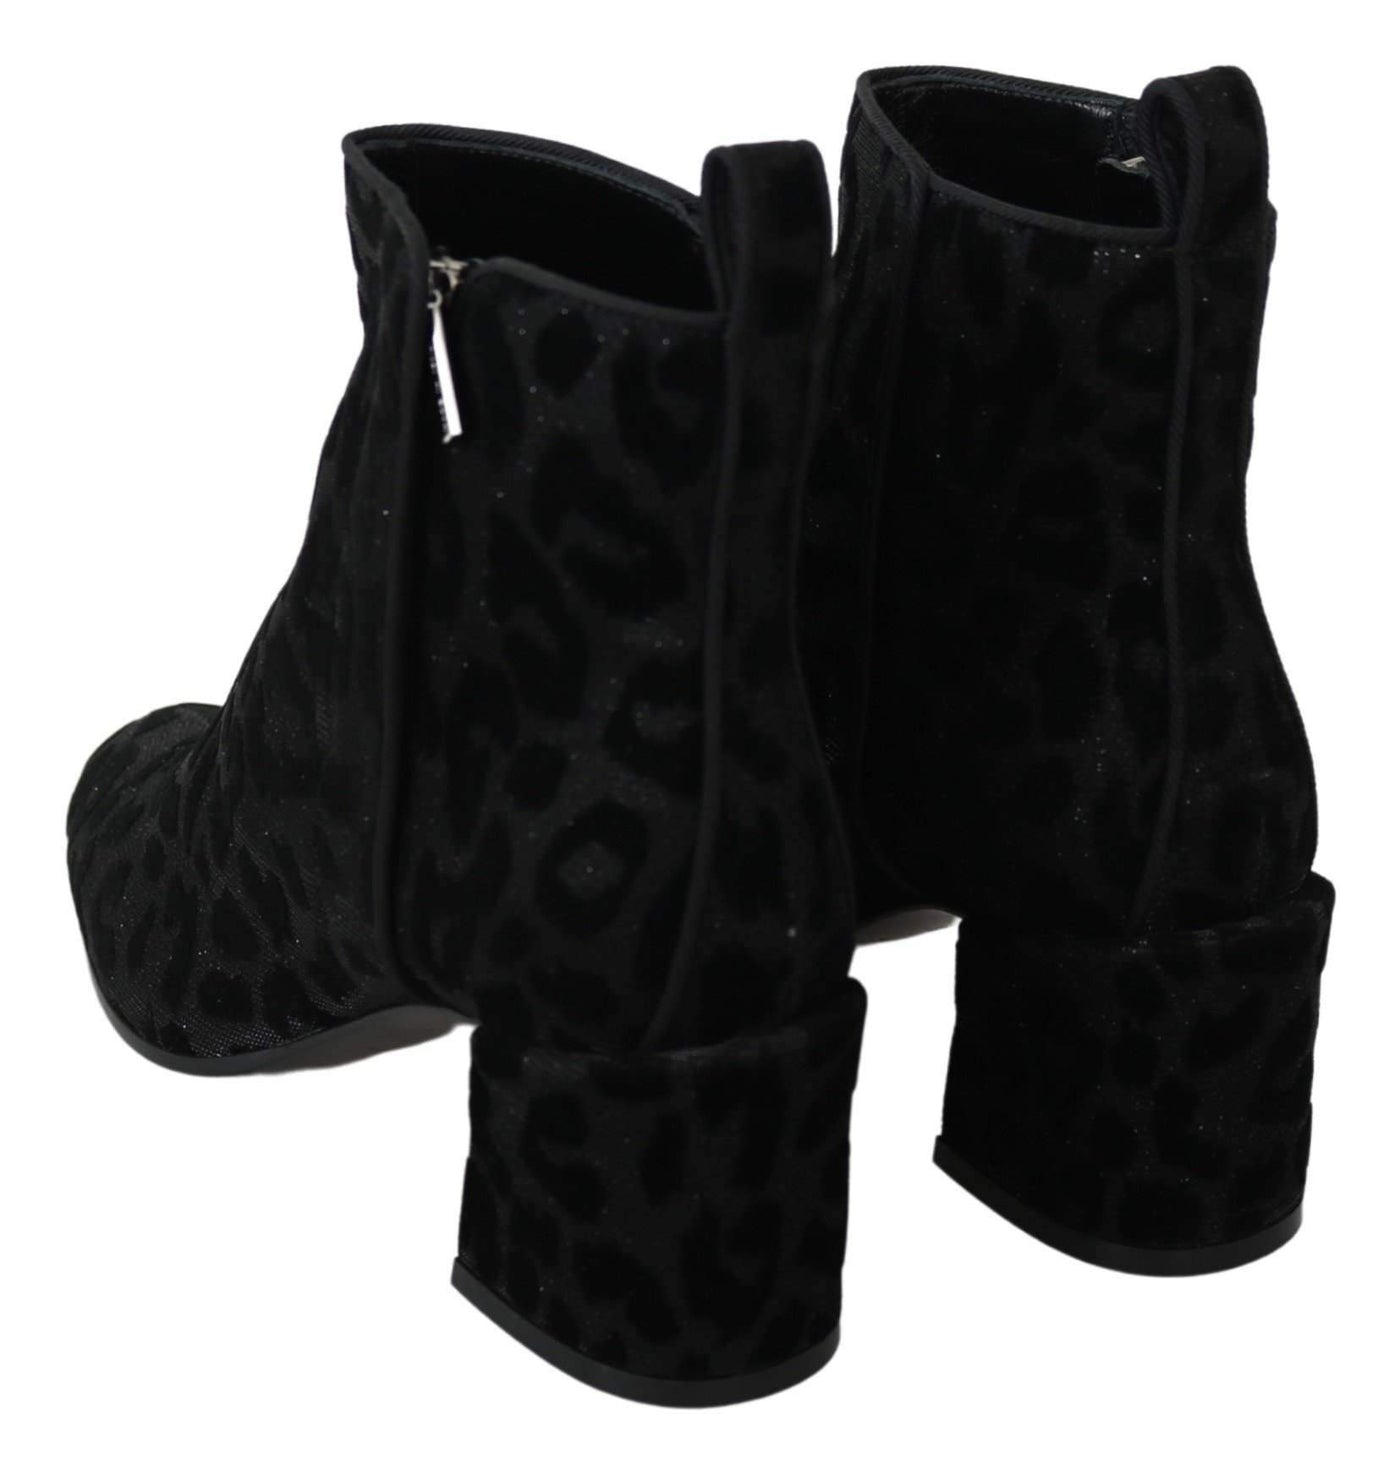 Dolce & Gabbana Black Leopard Short Boots Zipper Shoes #women, Black, Boots - Women - Shoes, Brand_Dolce & Gabbana, Dolce & Gabbana, EU36.5/US6, EU37.5/US7, EU38.5/US8, EU39.5/US9, feed-agegroup-adult, feed-color-black, feed-gender-female, feed-size-US6, feed-size-US7, feed-size-US8, feed-size-US9, Gender_Women, Shoes - New Arrivals at SEYMAYKA